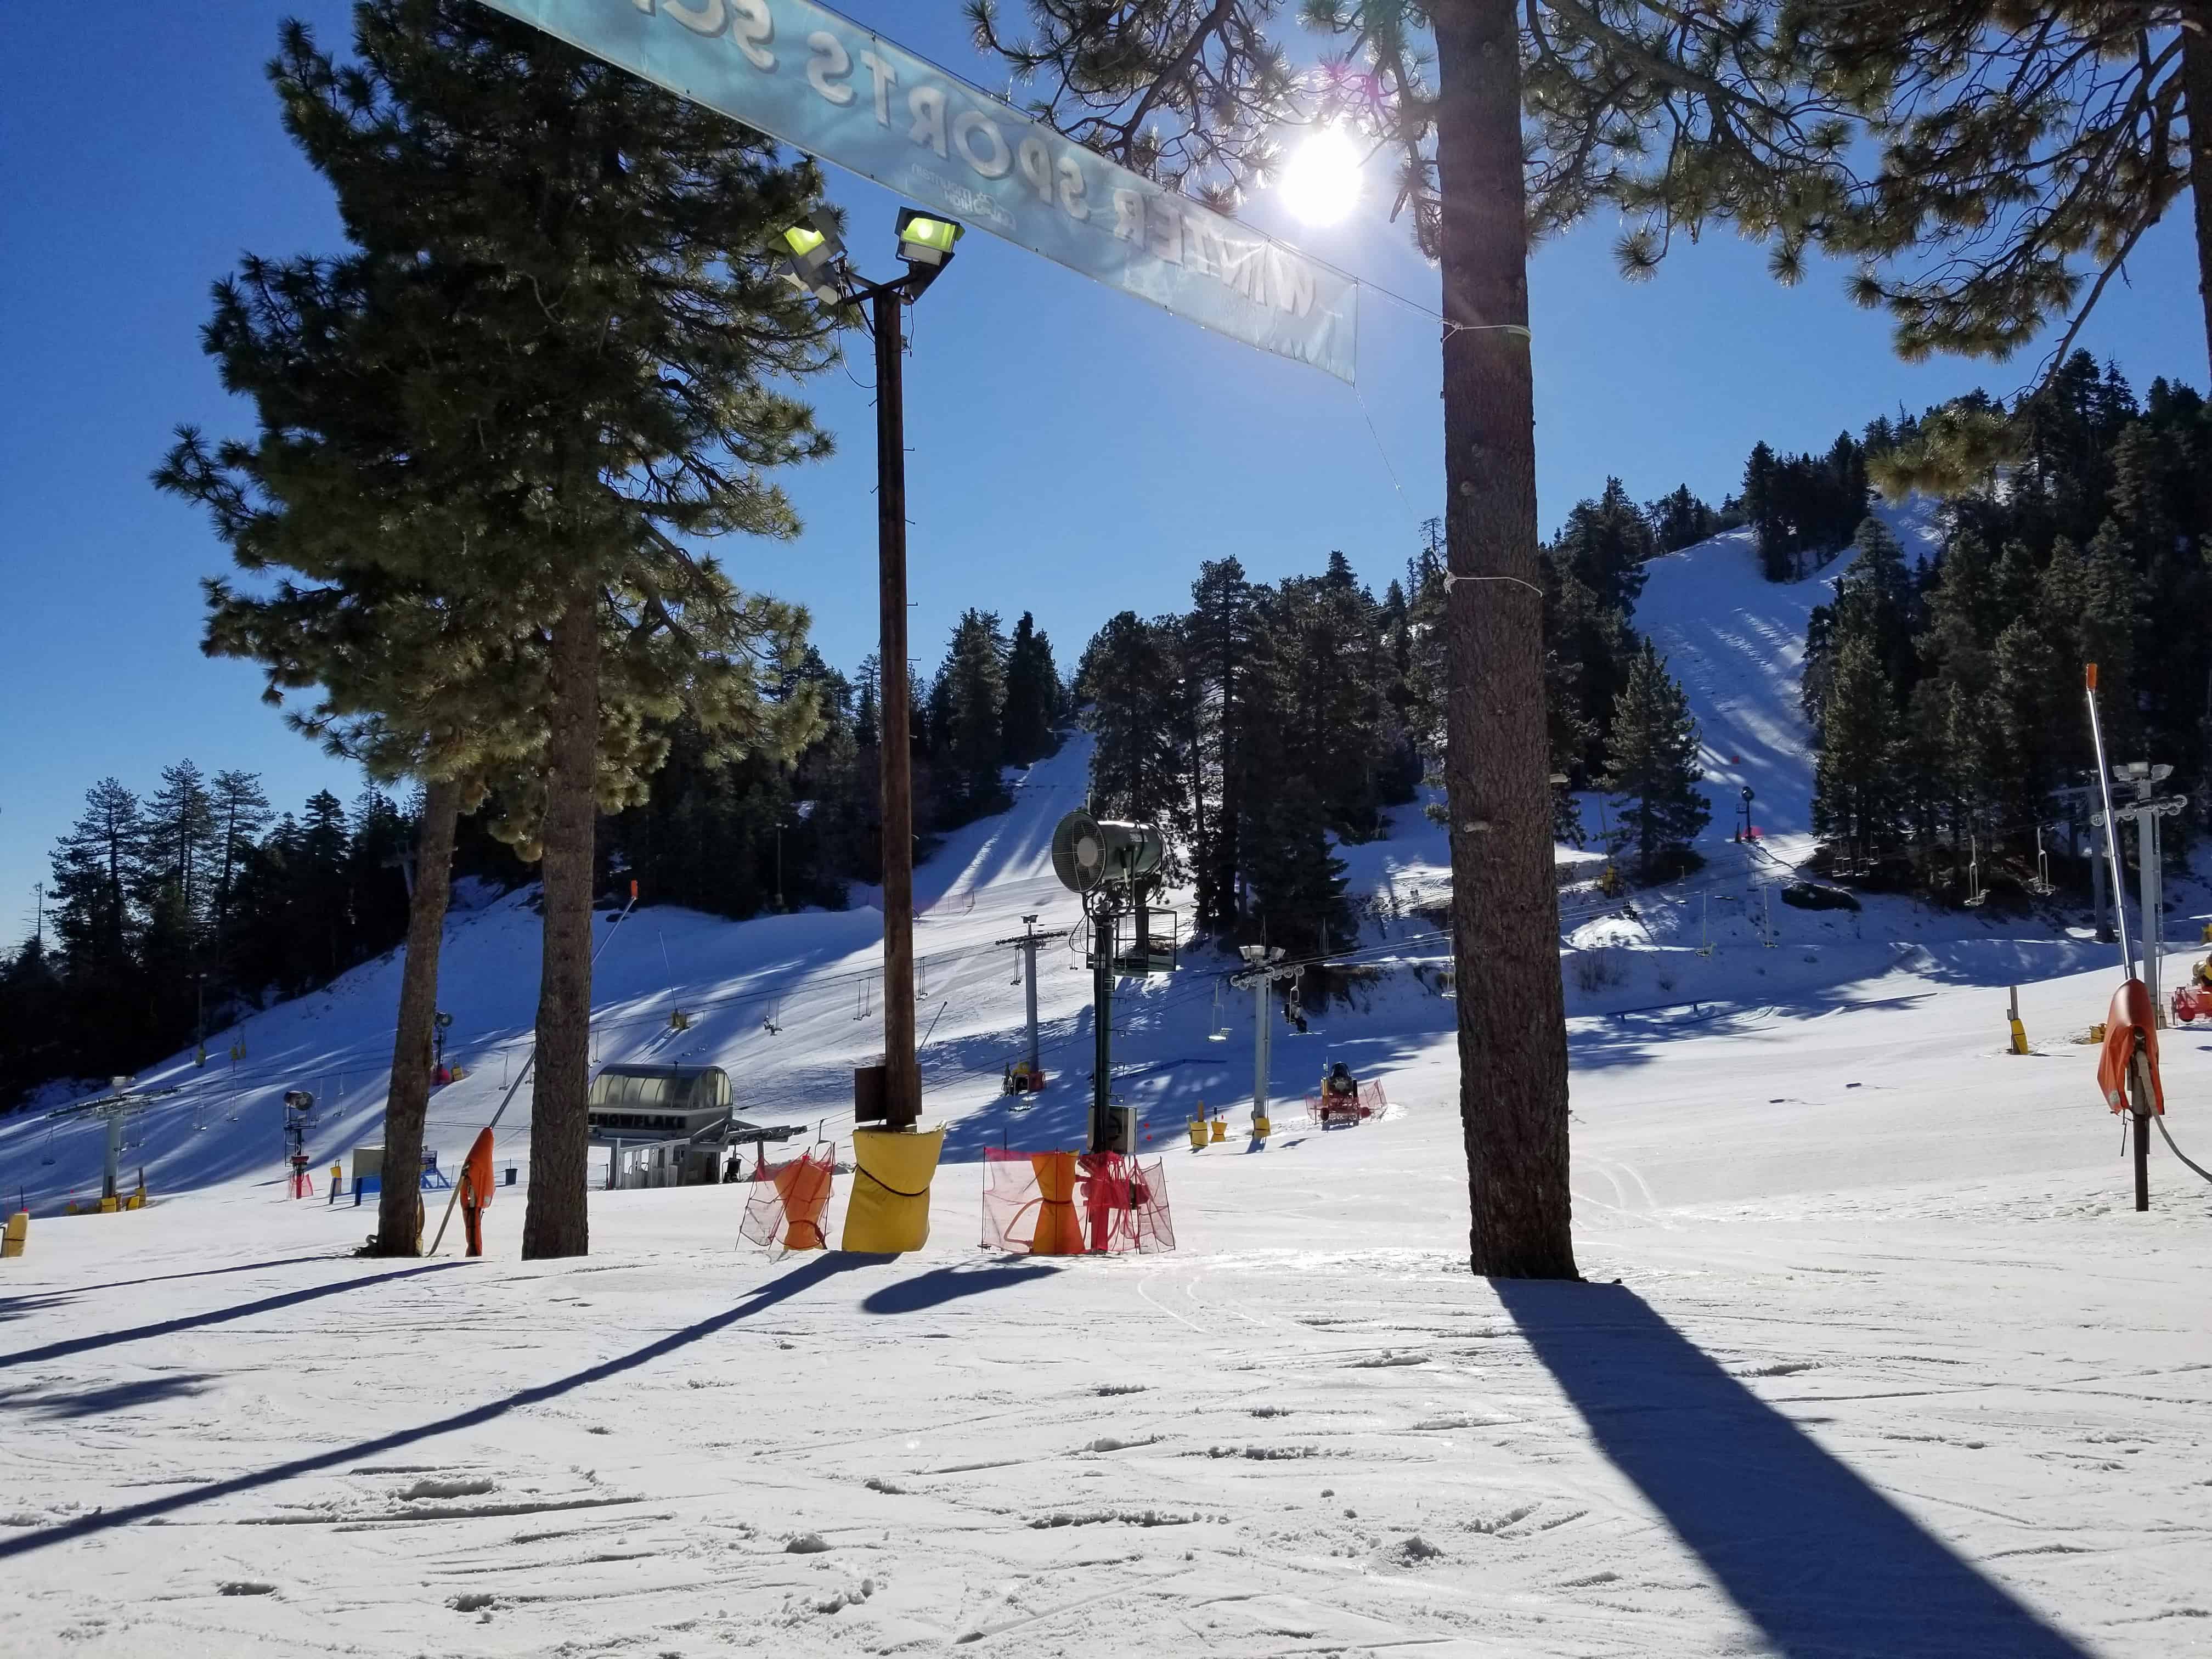 Learn to Ski at Mountain High Ski Resort in Southern California